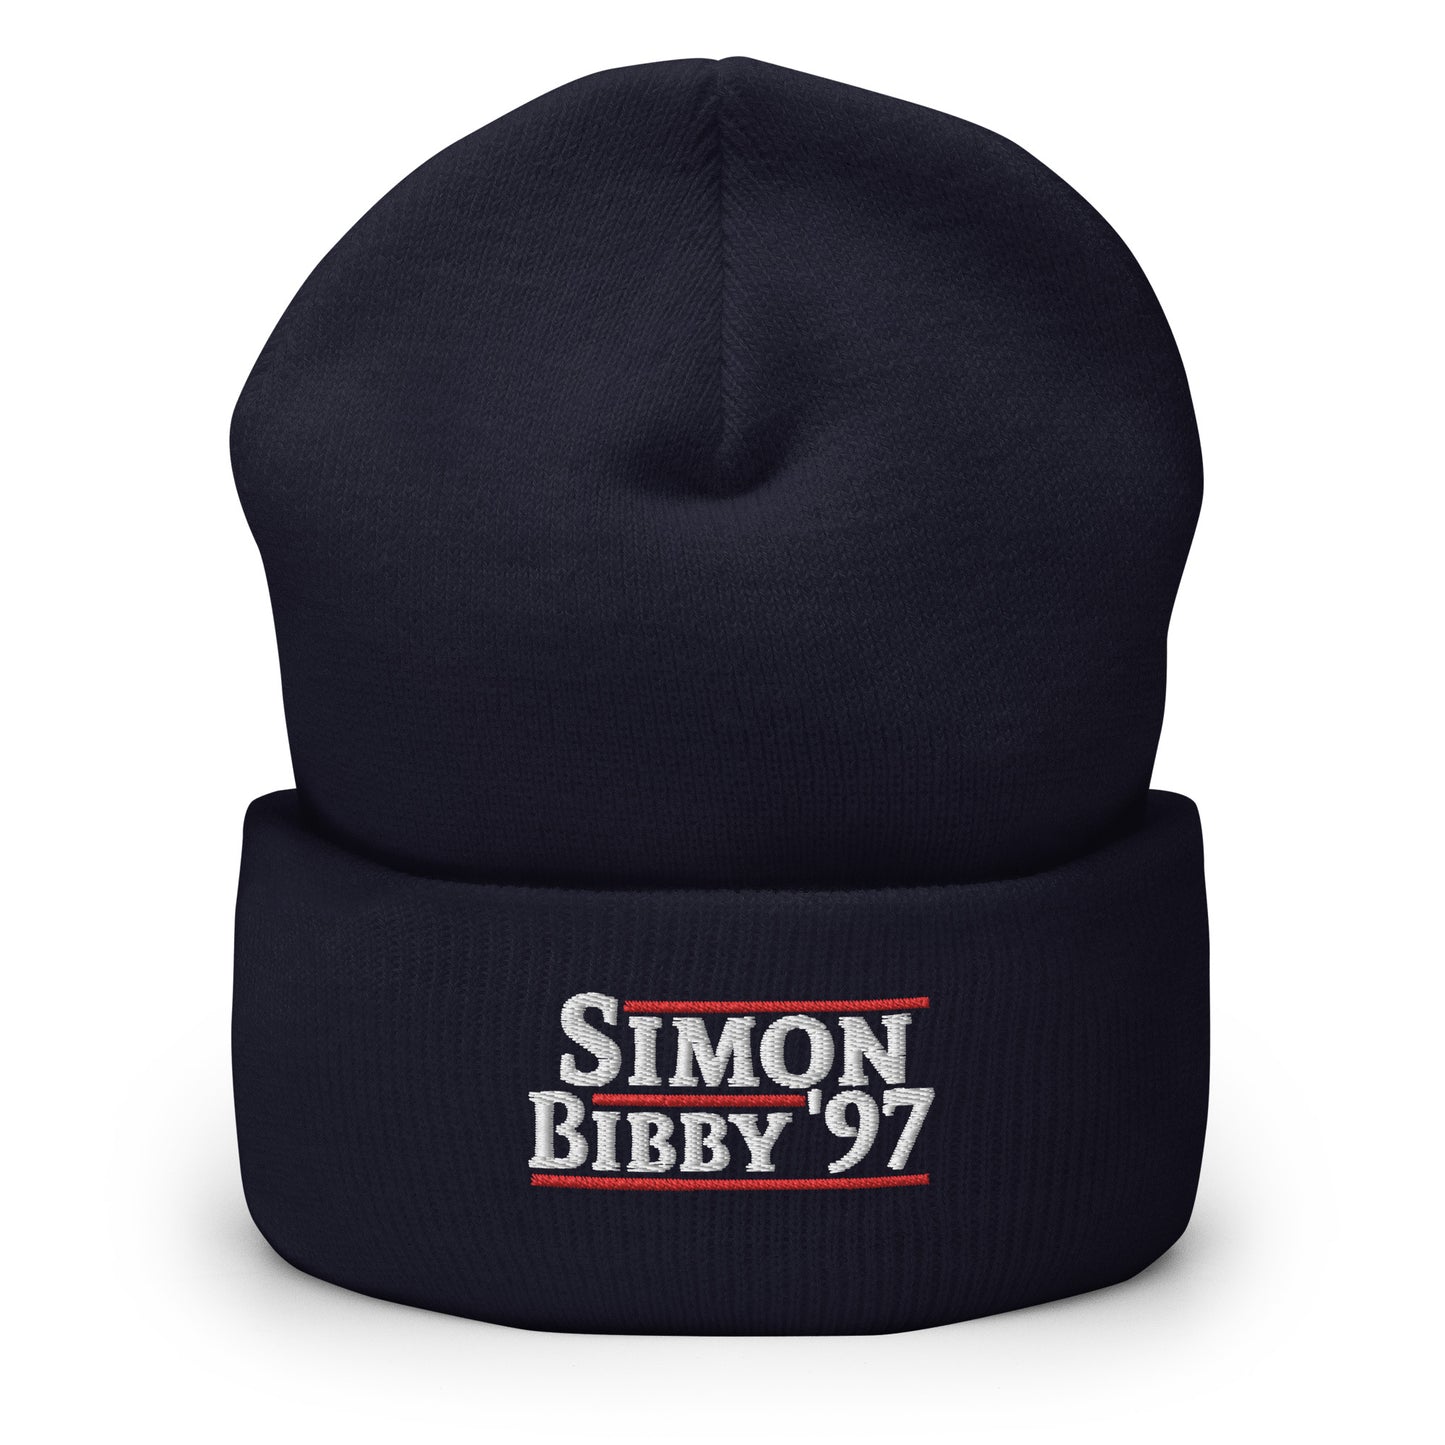 Simon/Bibby '97 - Beanie Hat